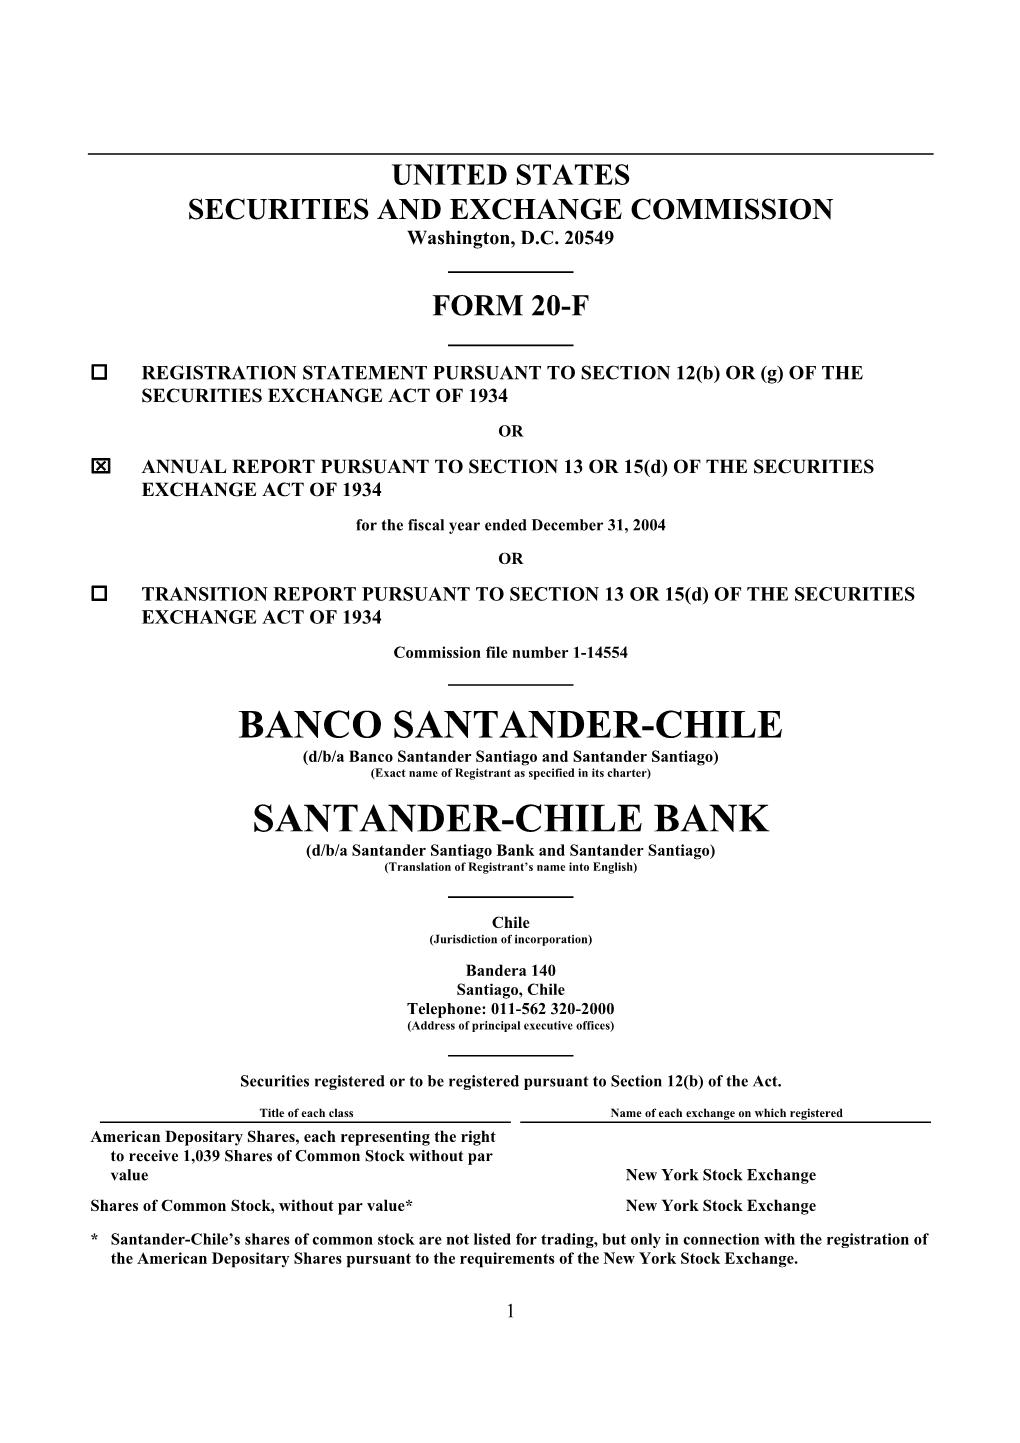 BANCO SANTANDER-CHILE (D/B/A Banco Santander Santiago and Santander Santiago) (Exact Name of Registrant As Specified in Its Charter)